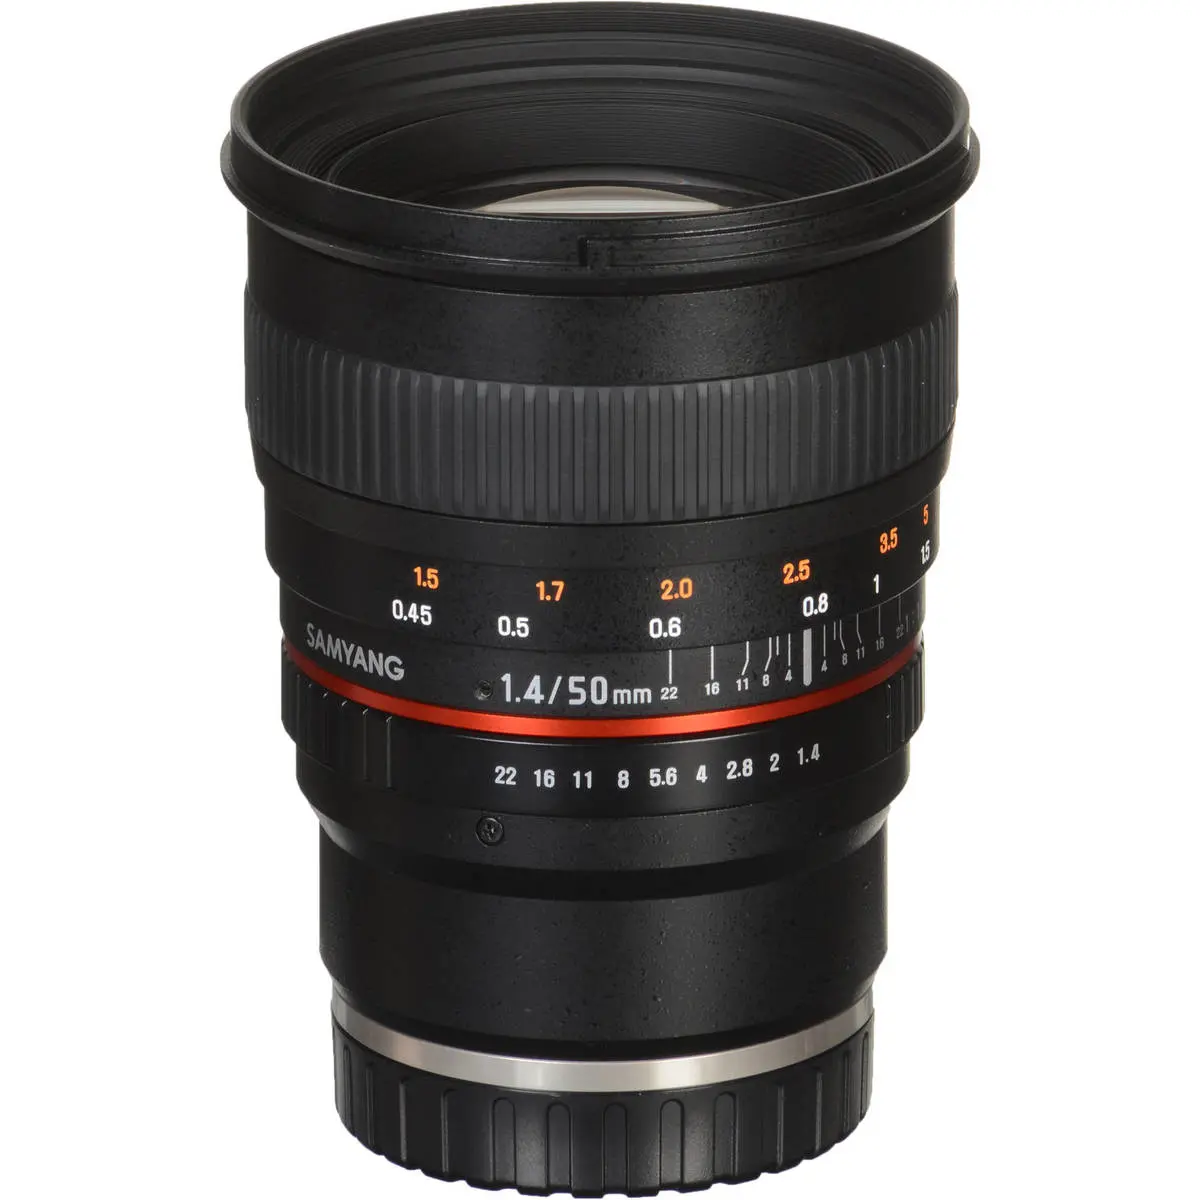 8. Samyang 50 mm f/1.4 AS UMC (Sony A) Lens